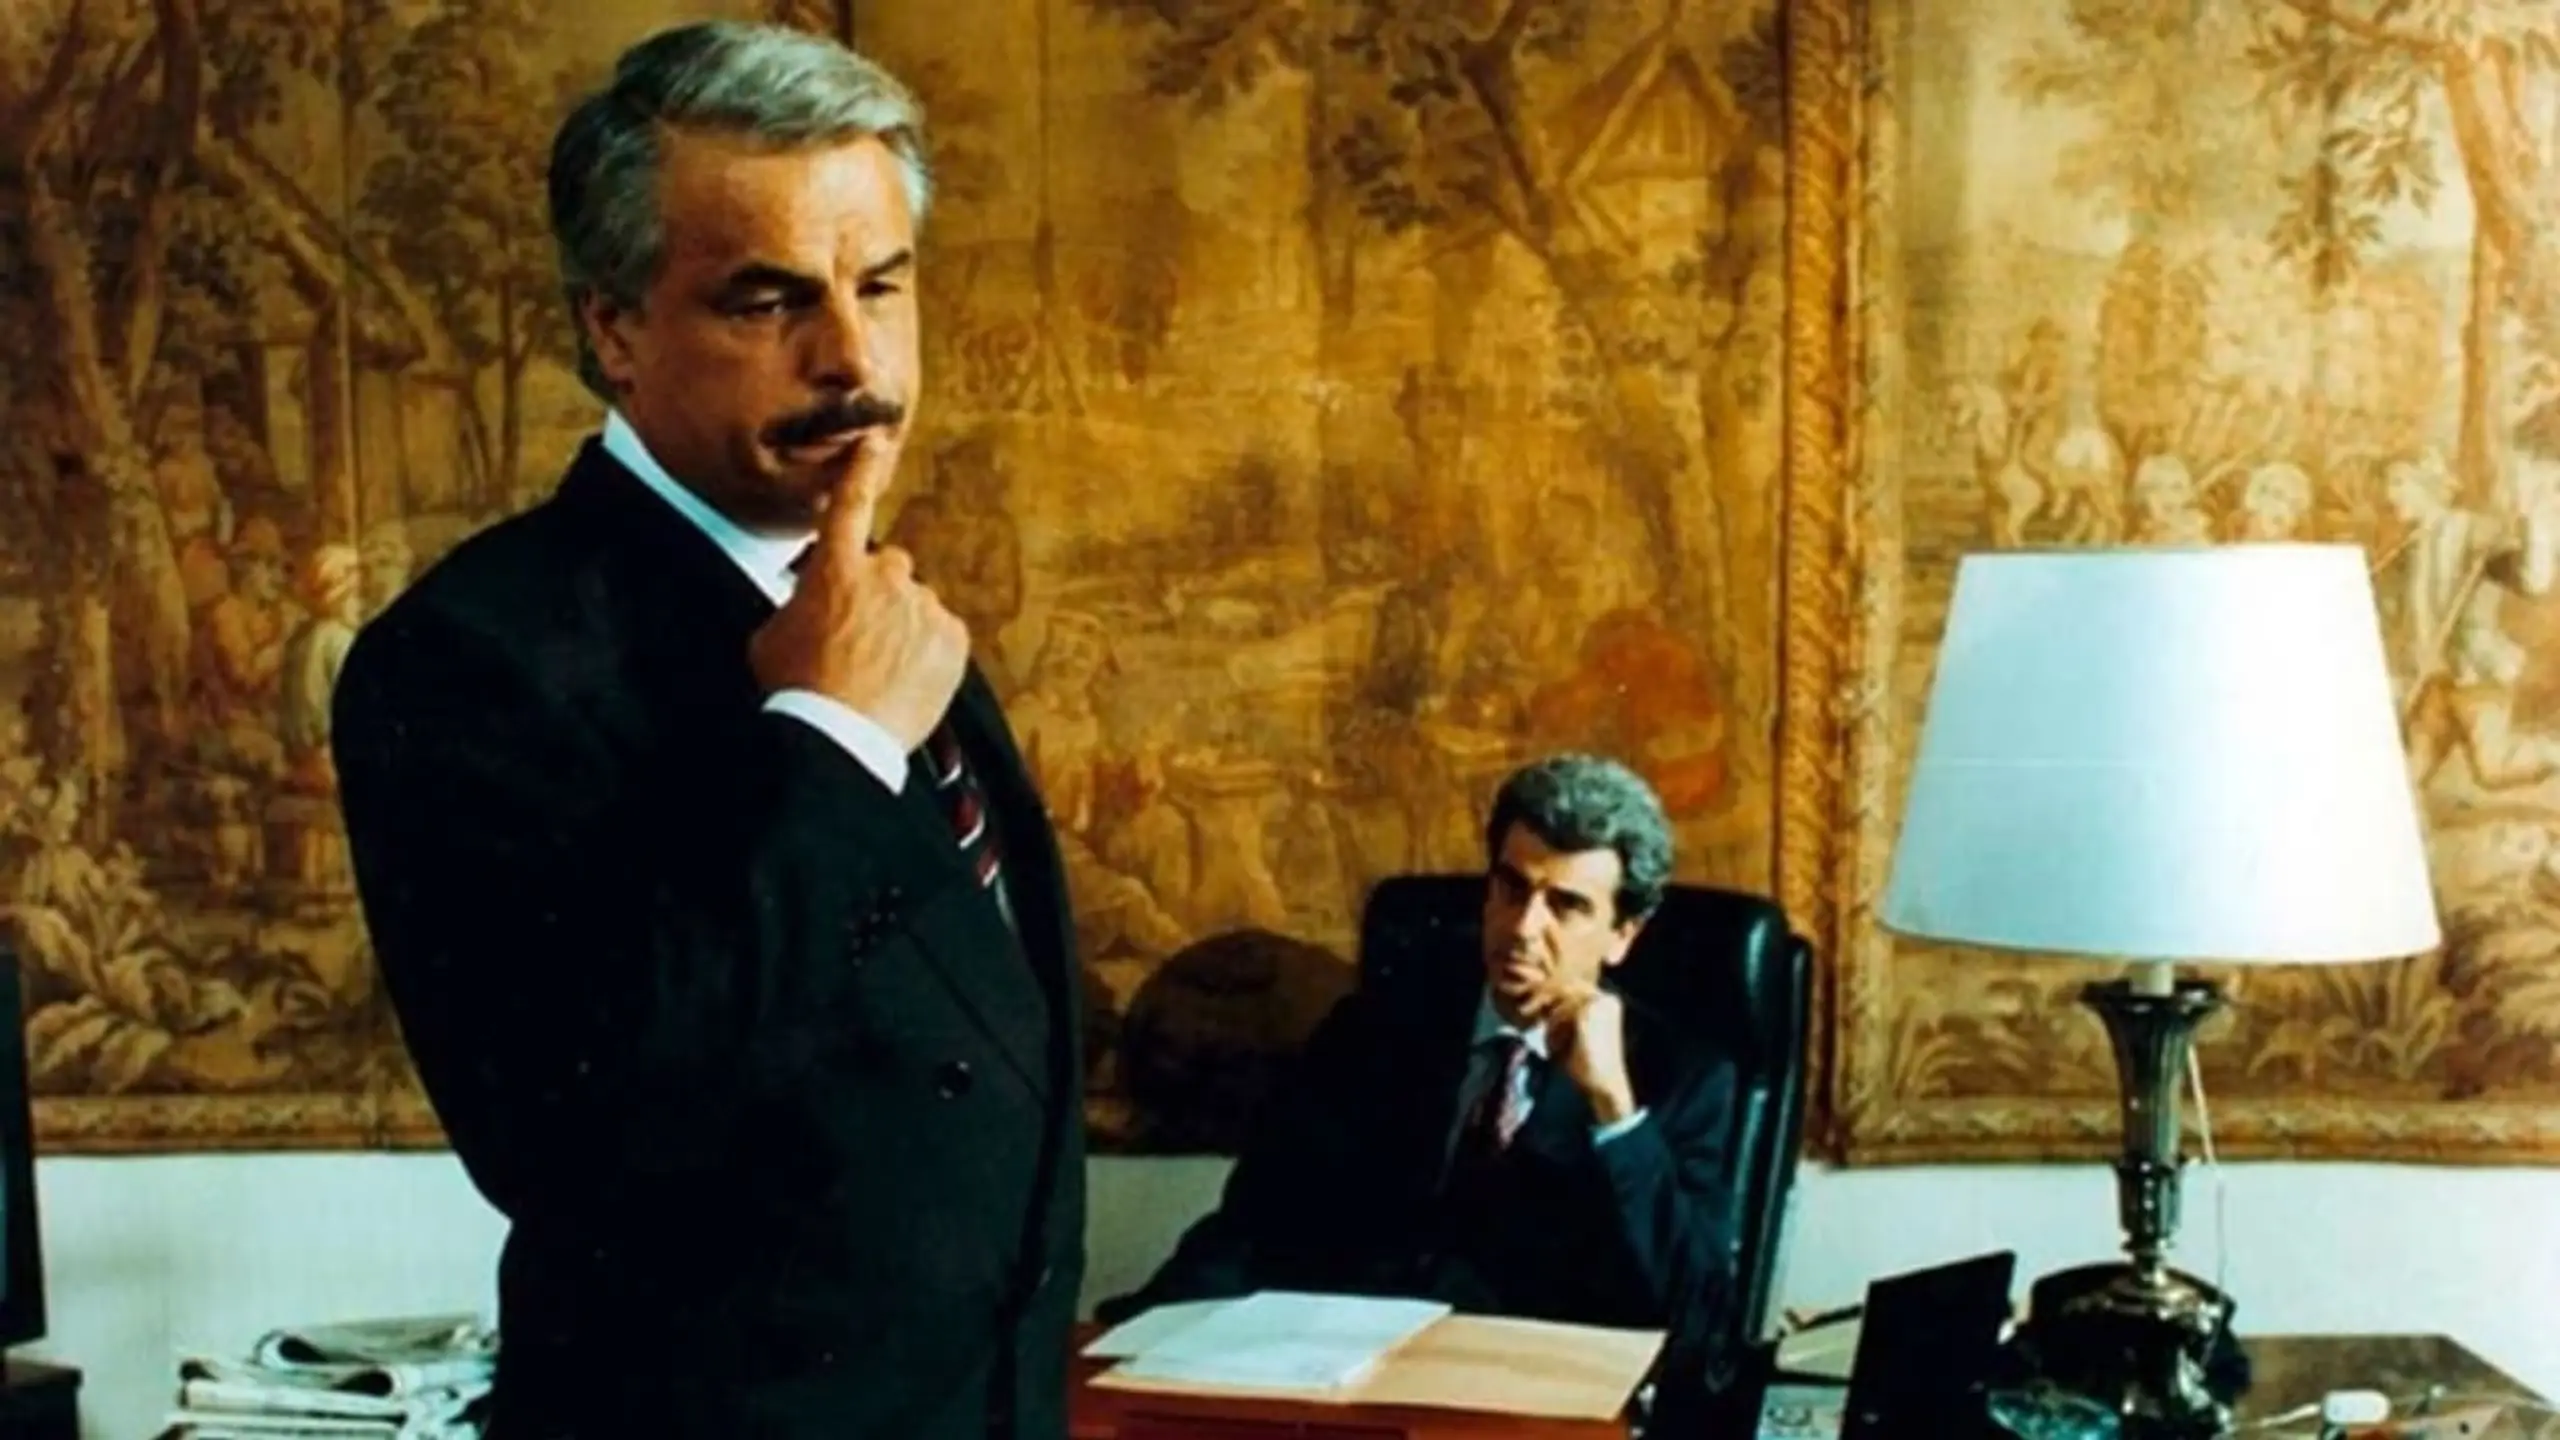 Giovanni Falcone - Im Netz der Mafia